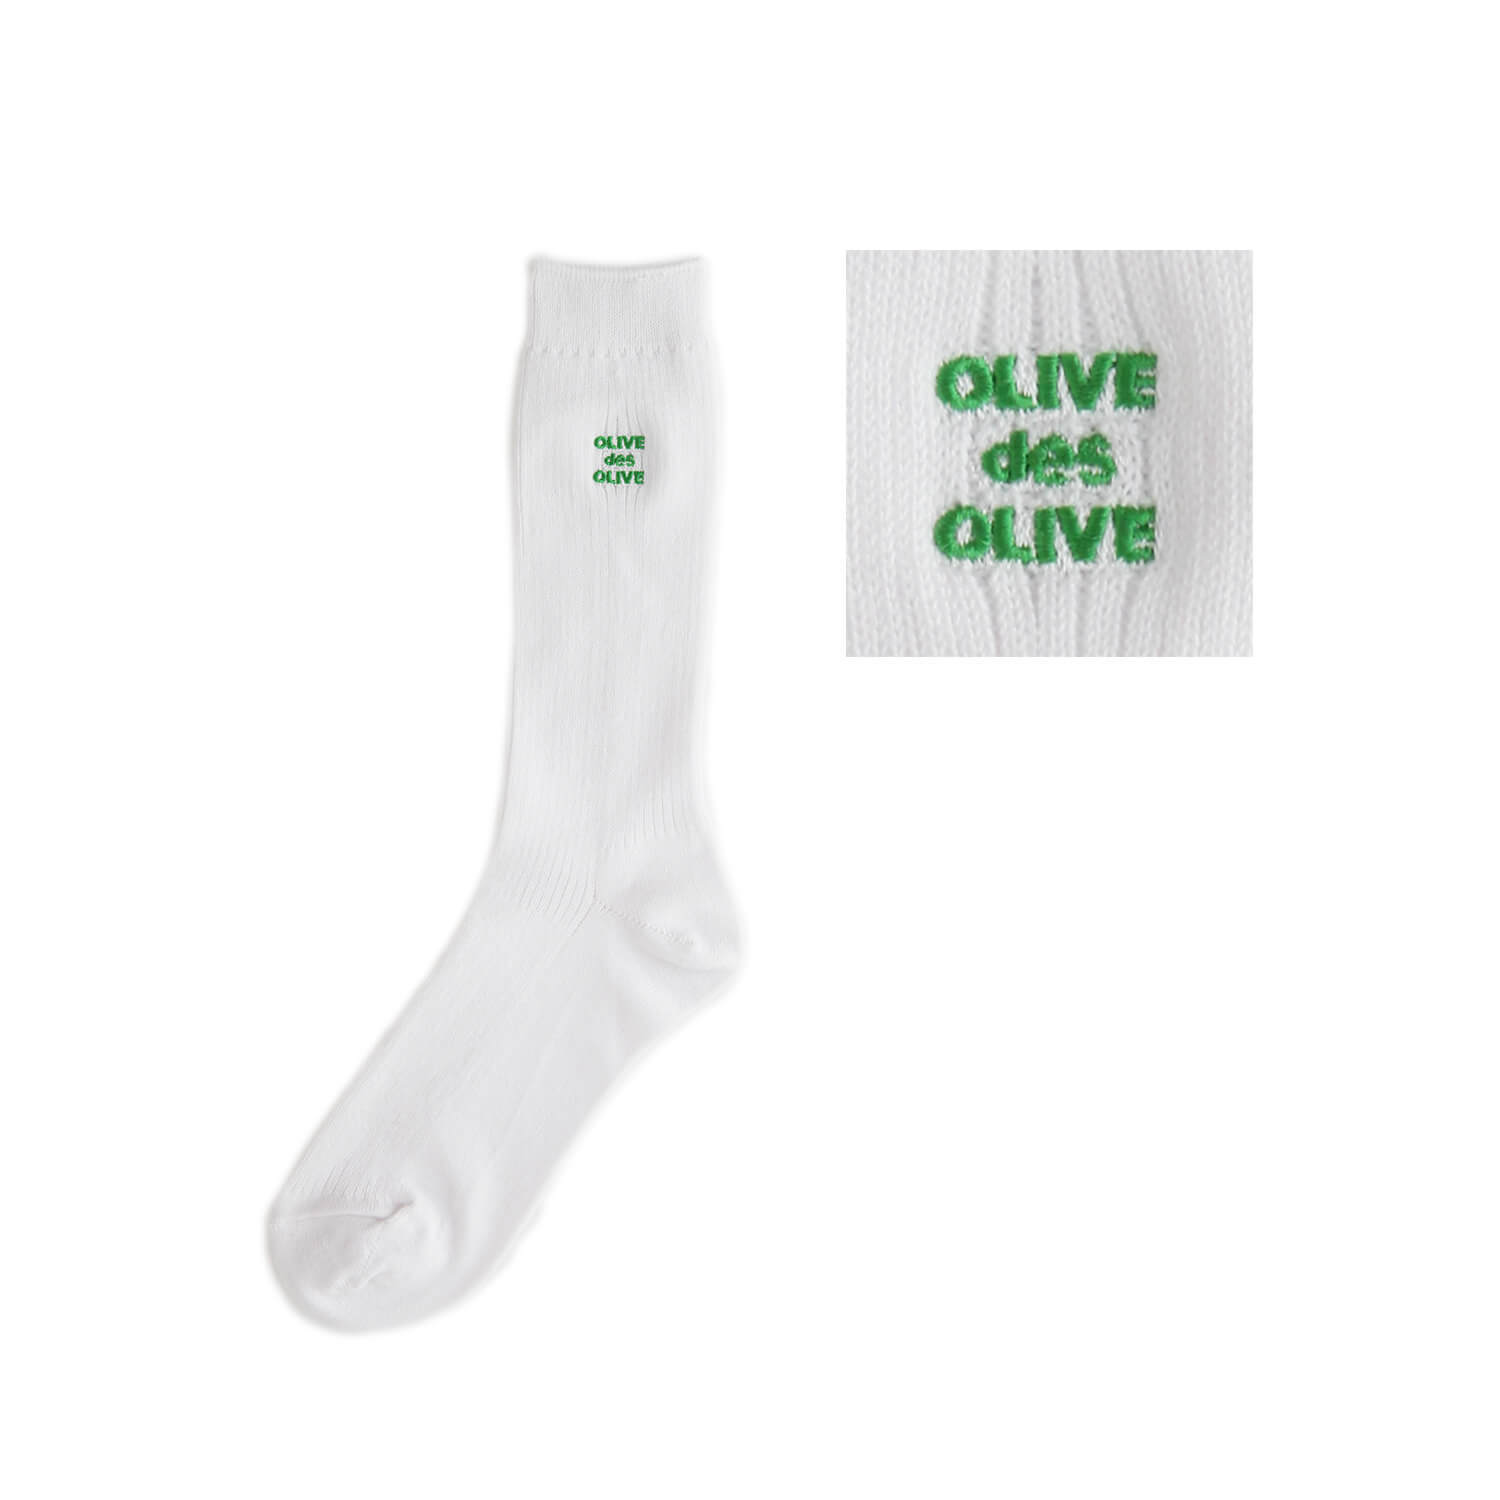 OLIVE des OLIVEのポップなロゴ刺繍入りの白ソックス。刺繍カラー-45緑